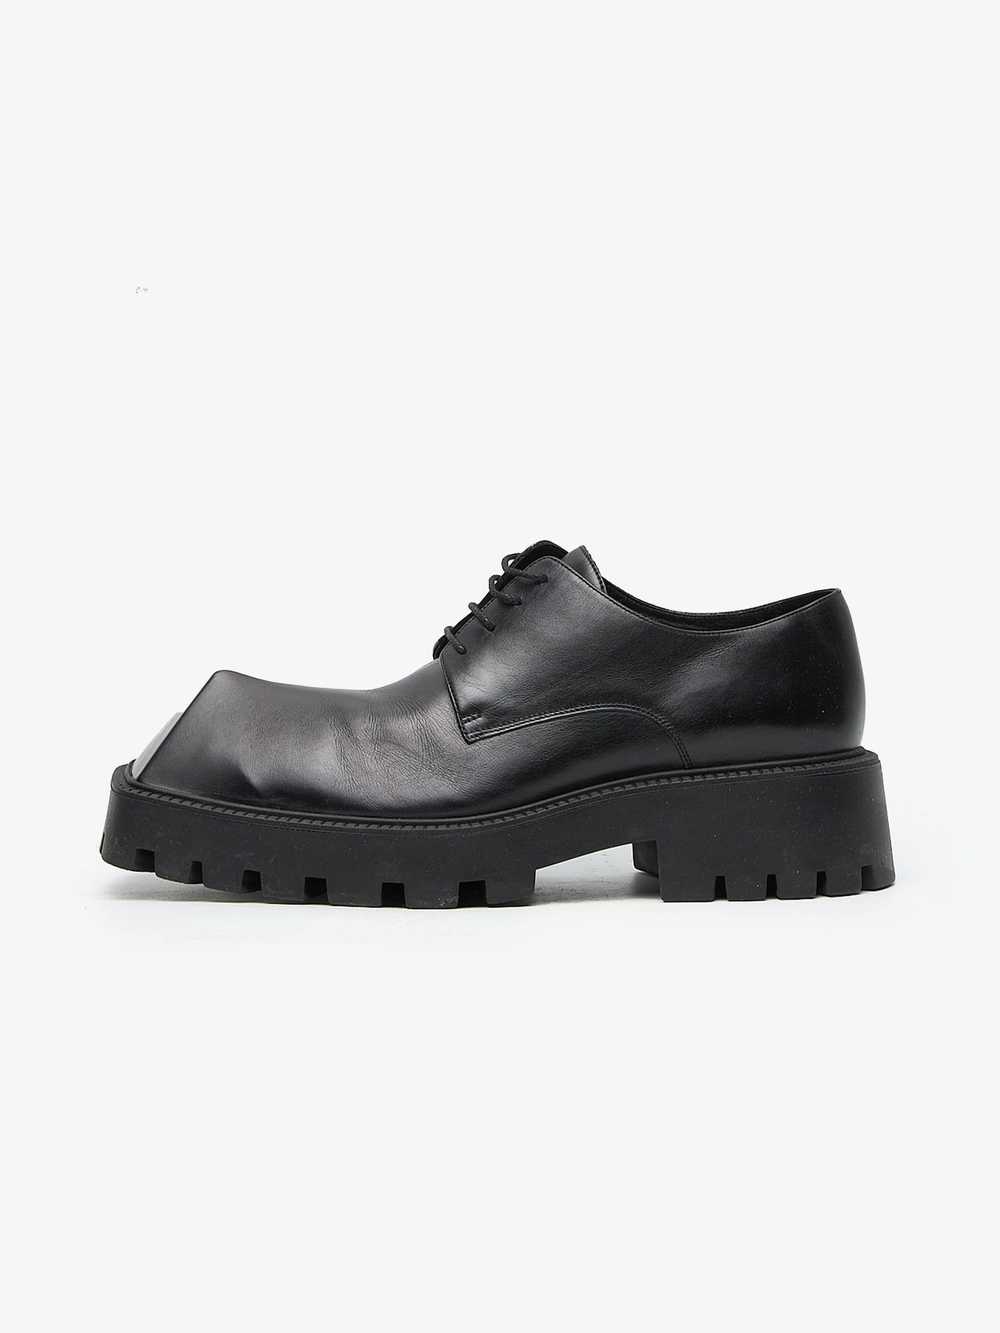 Balenciaga Black Rhino Leather Derby Shoes - image 1